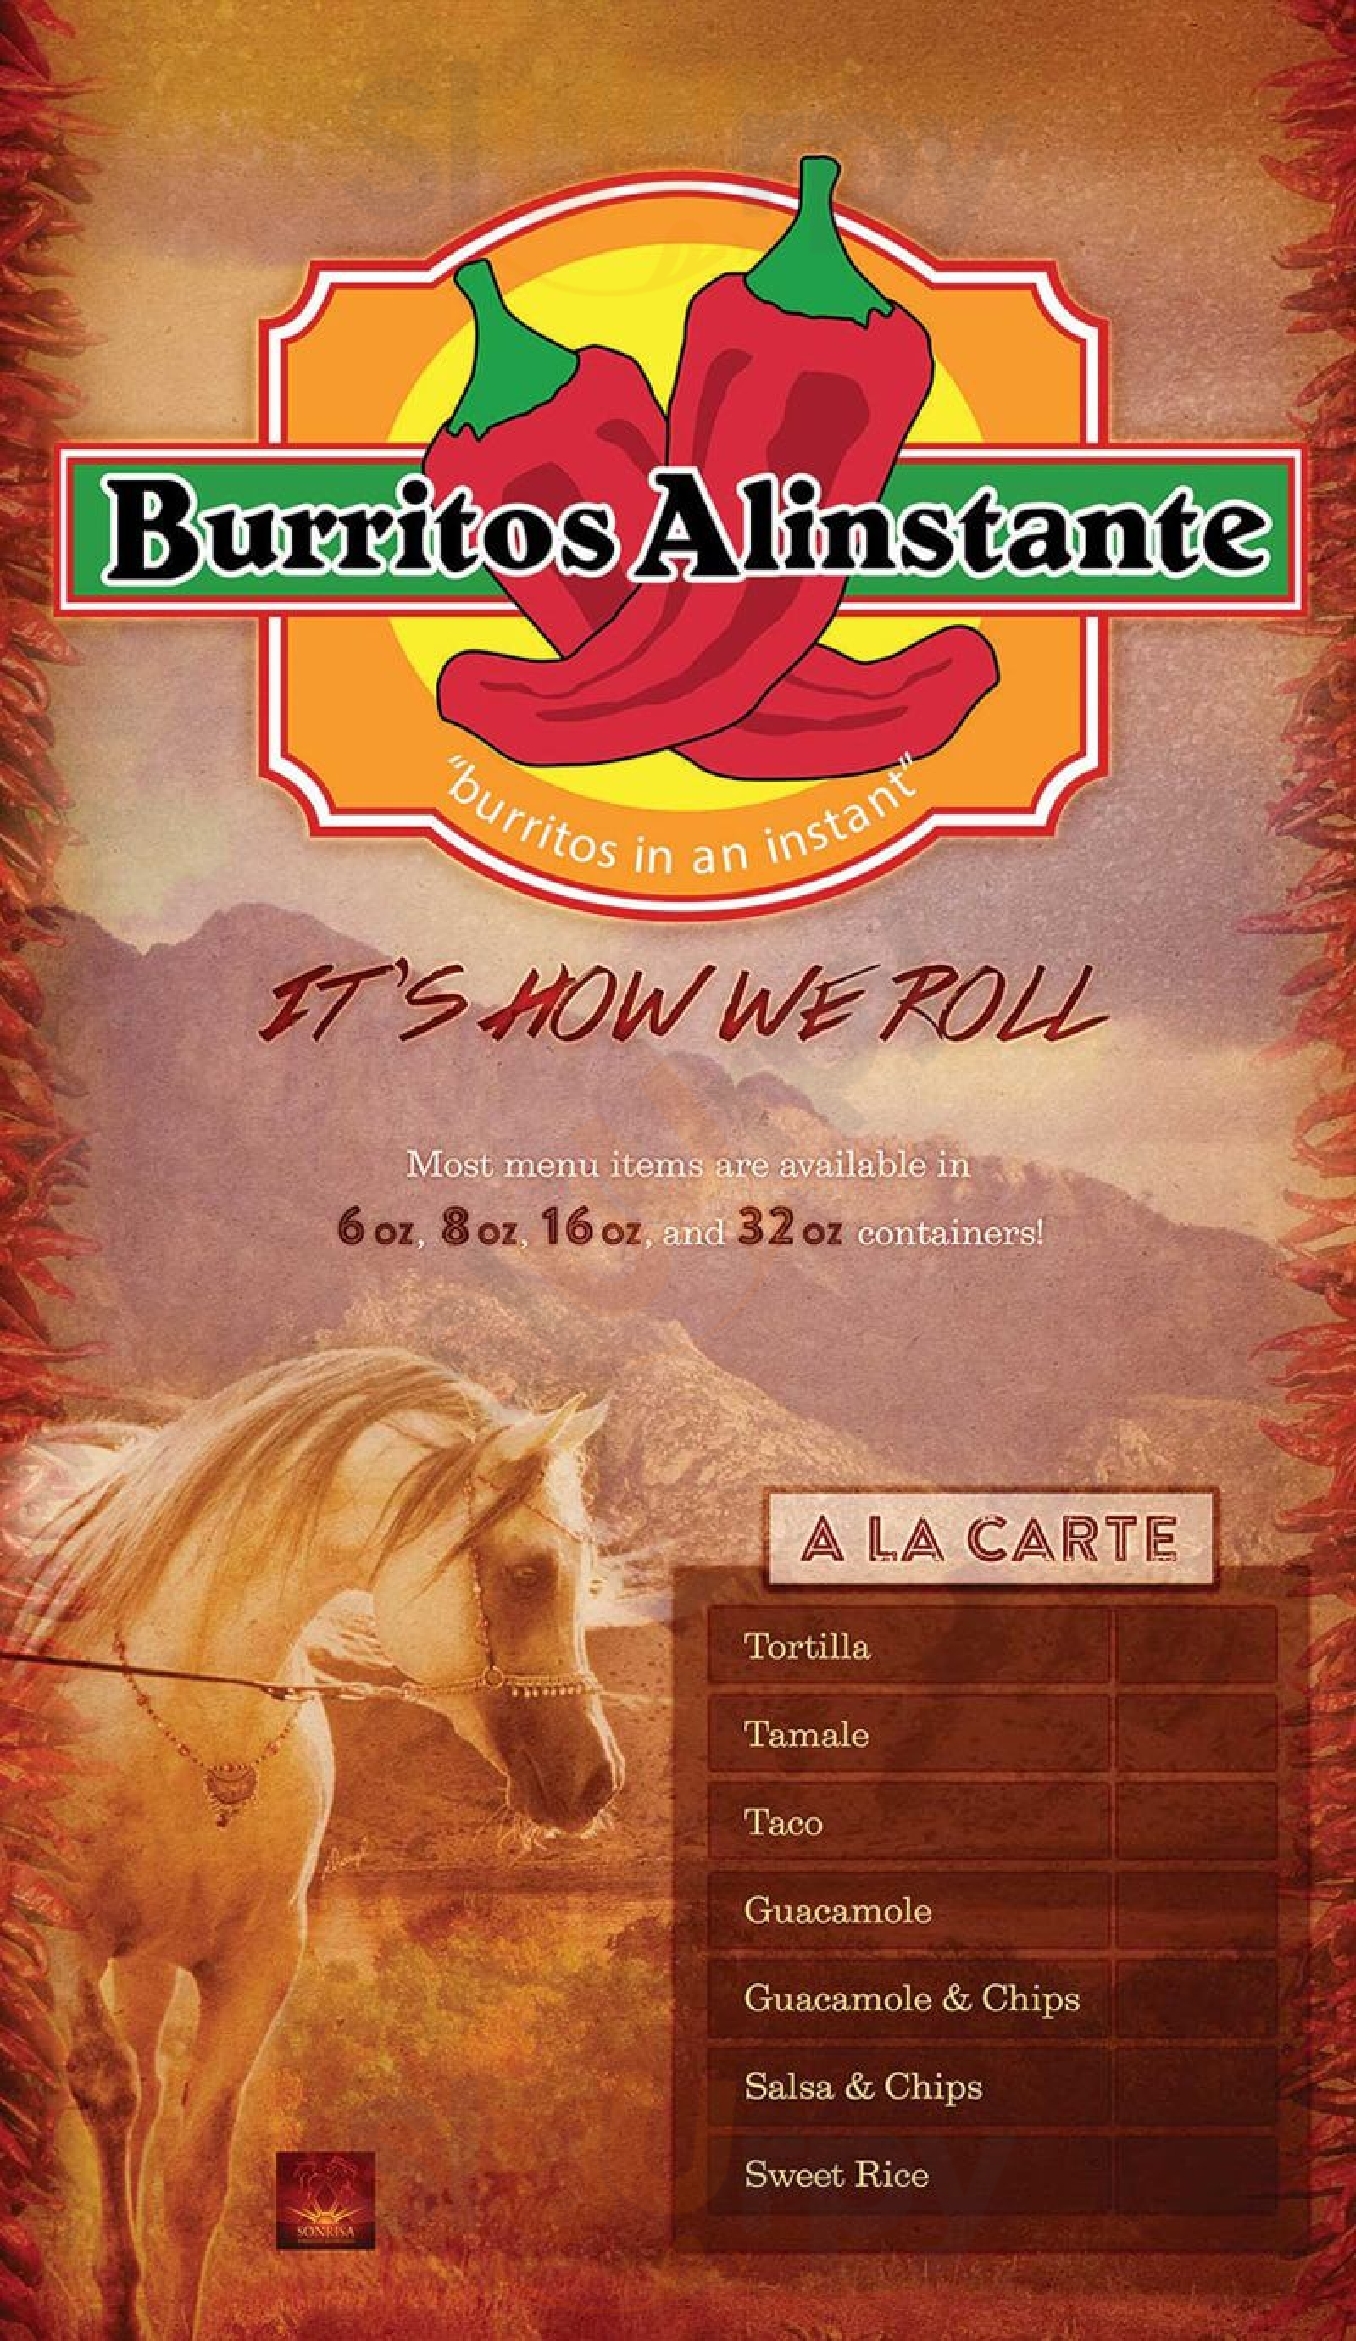 Burritos Alinstante - Broadway Albuquerque Menu - 1